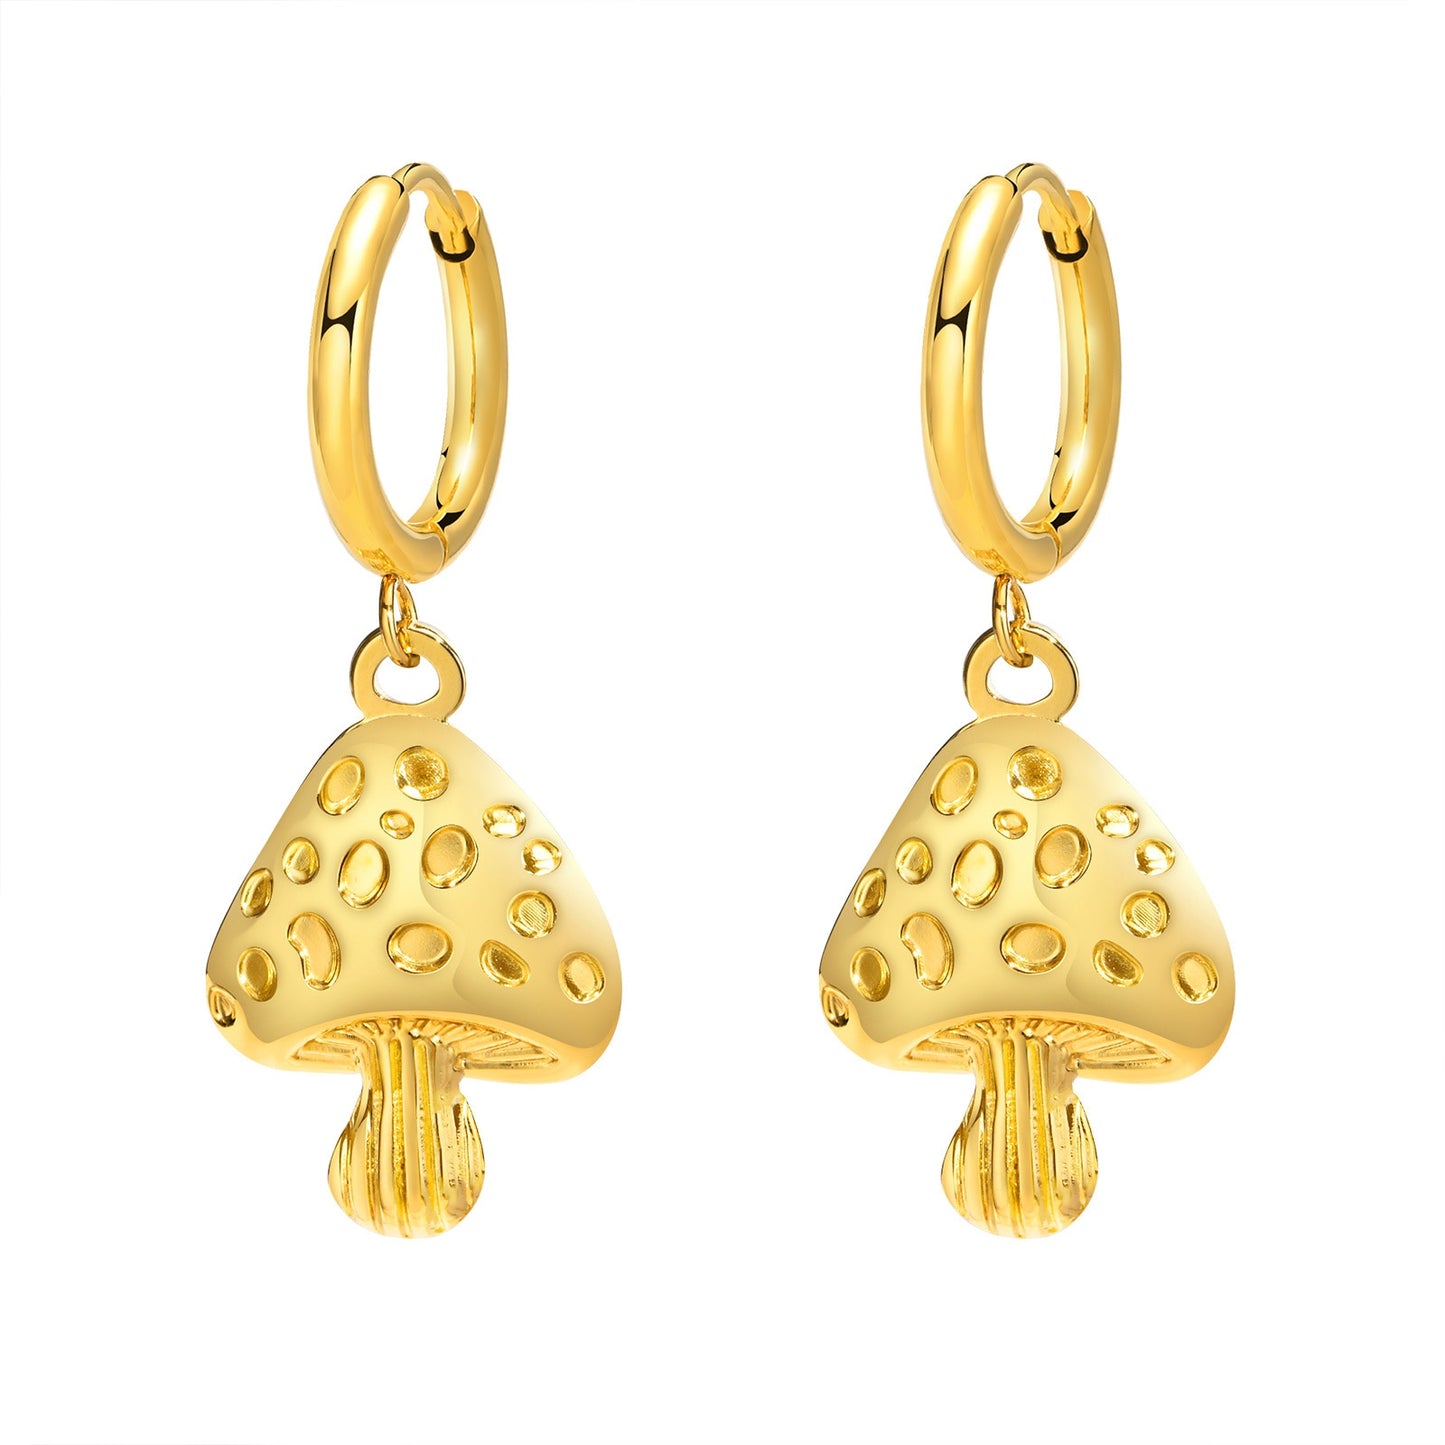 Aretes para mujeres Dainty Mushroom Charms earrings for Women